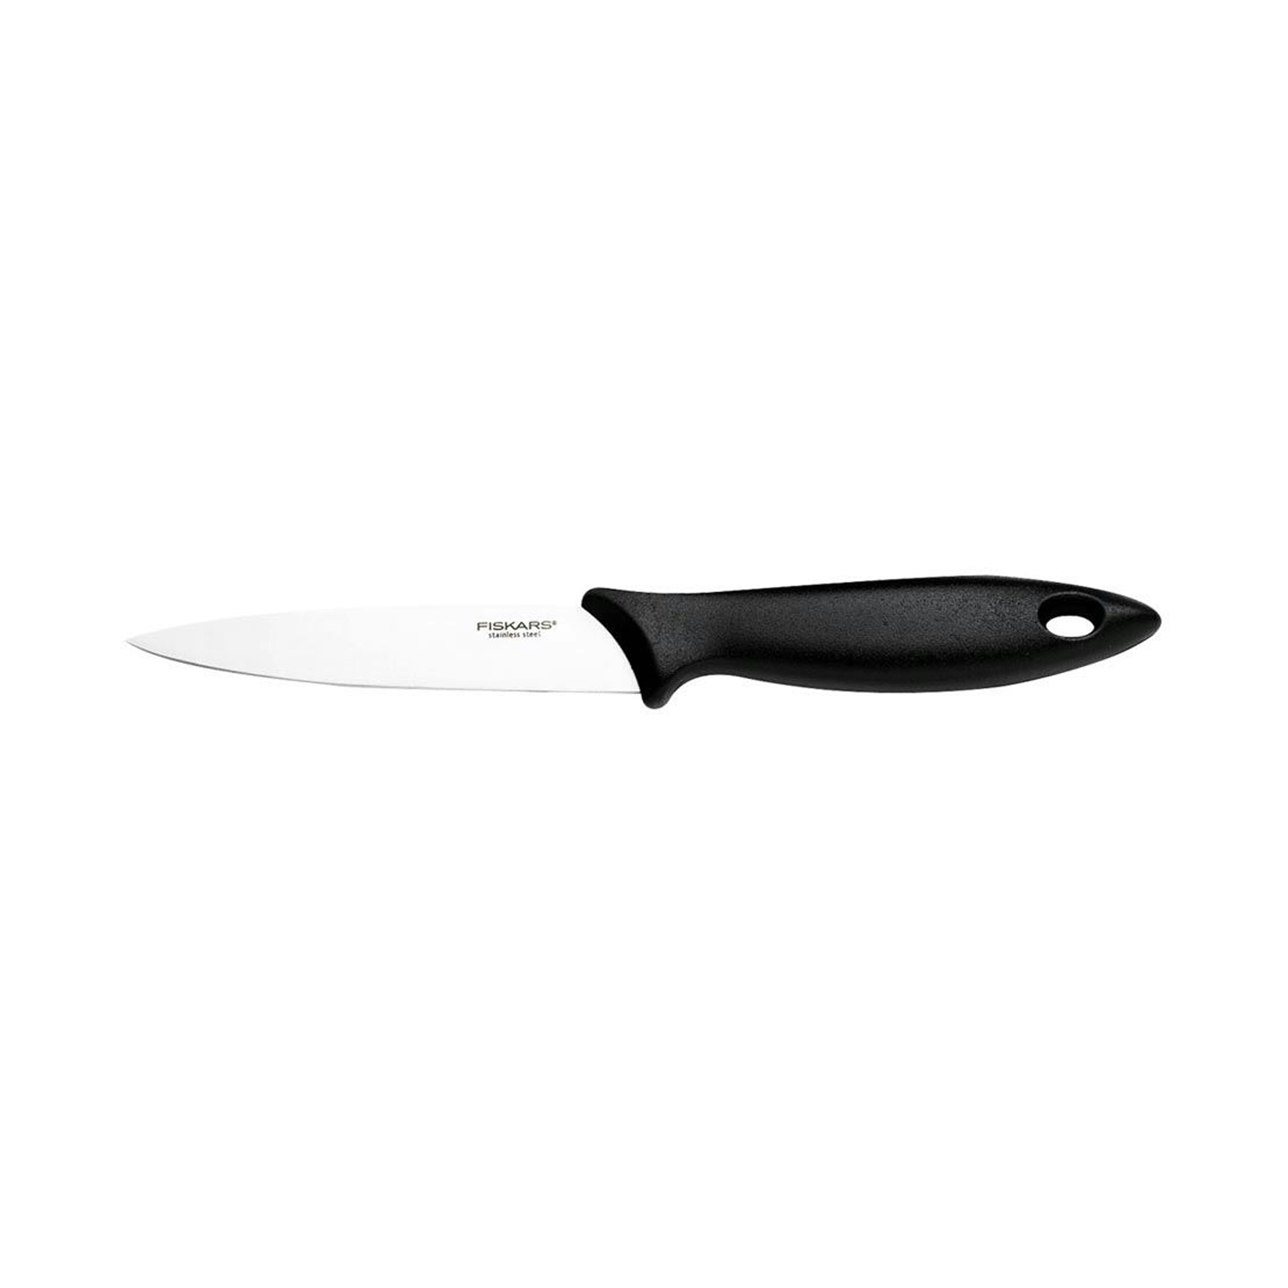 https://royaldesign.com/image/2/fiskars-essential-vegetable-knife-11-cm-1?w=800&quality=80